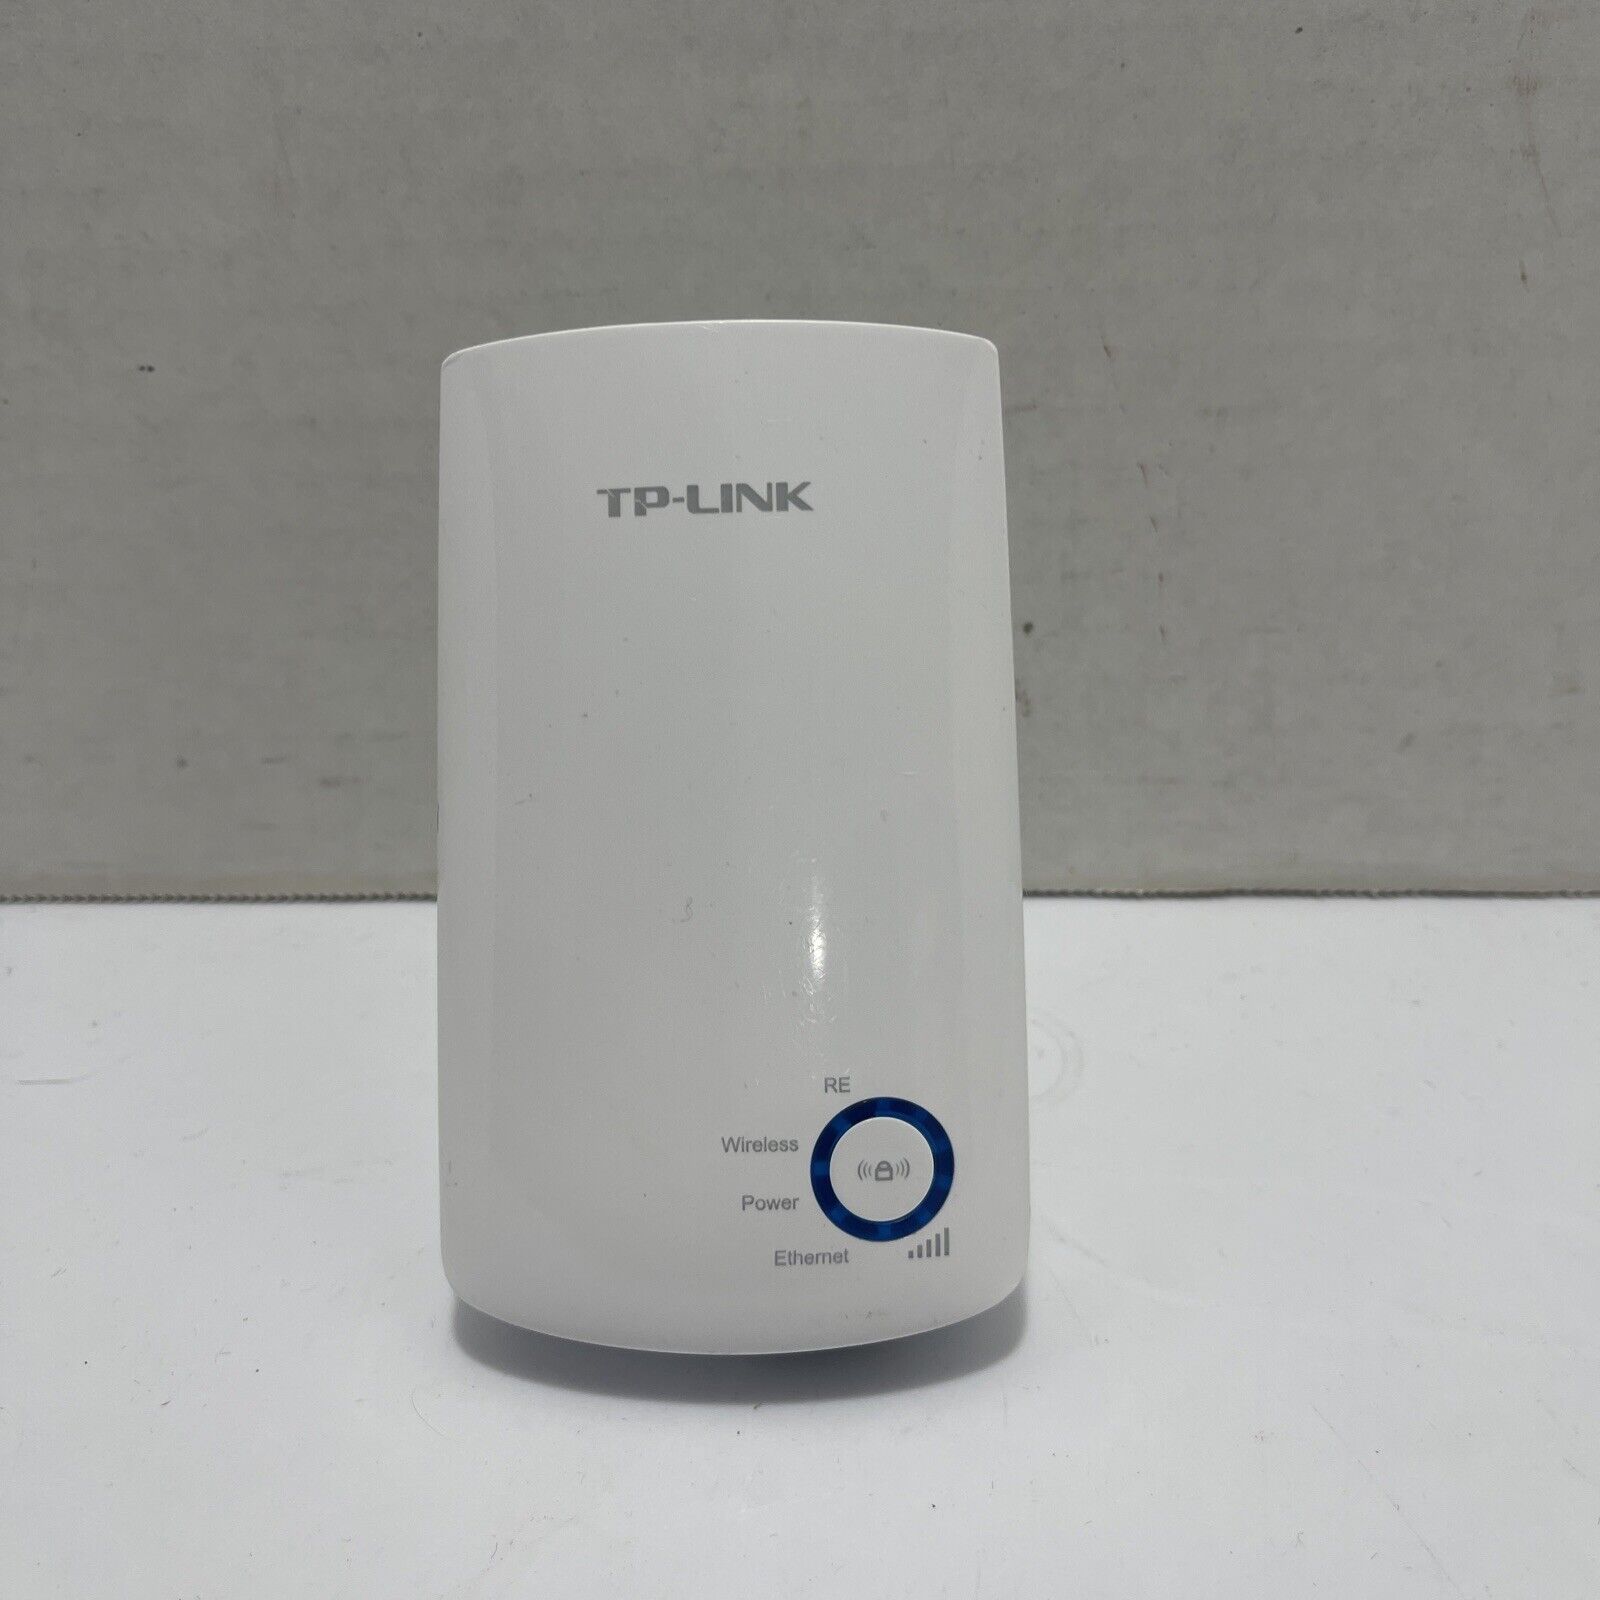 TP-LINK TL-WA850RE Wi-Fi Range Extender - Untested